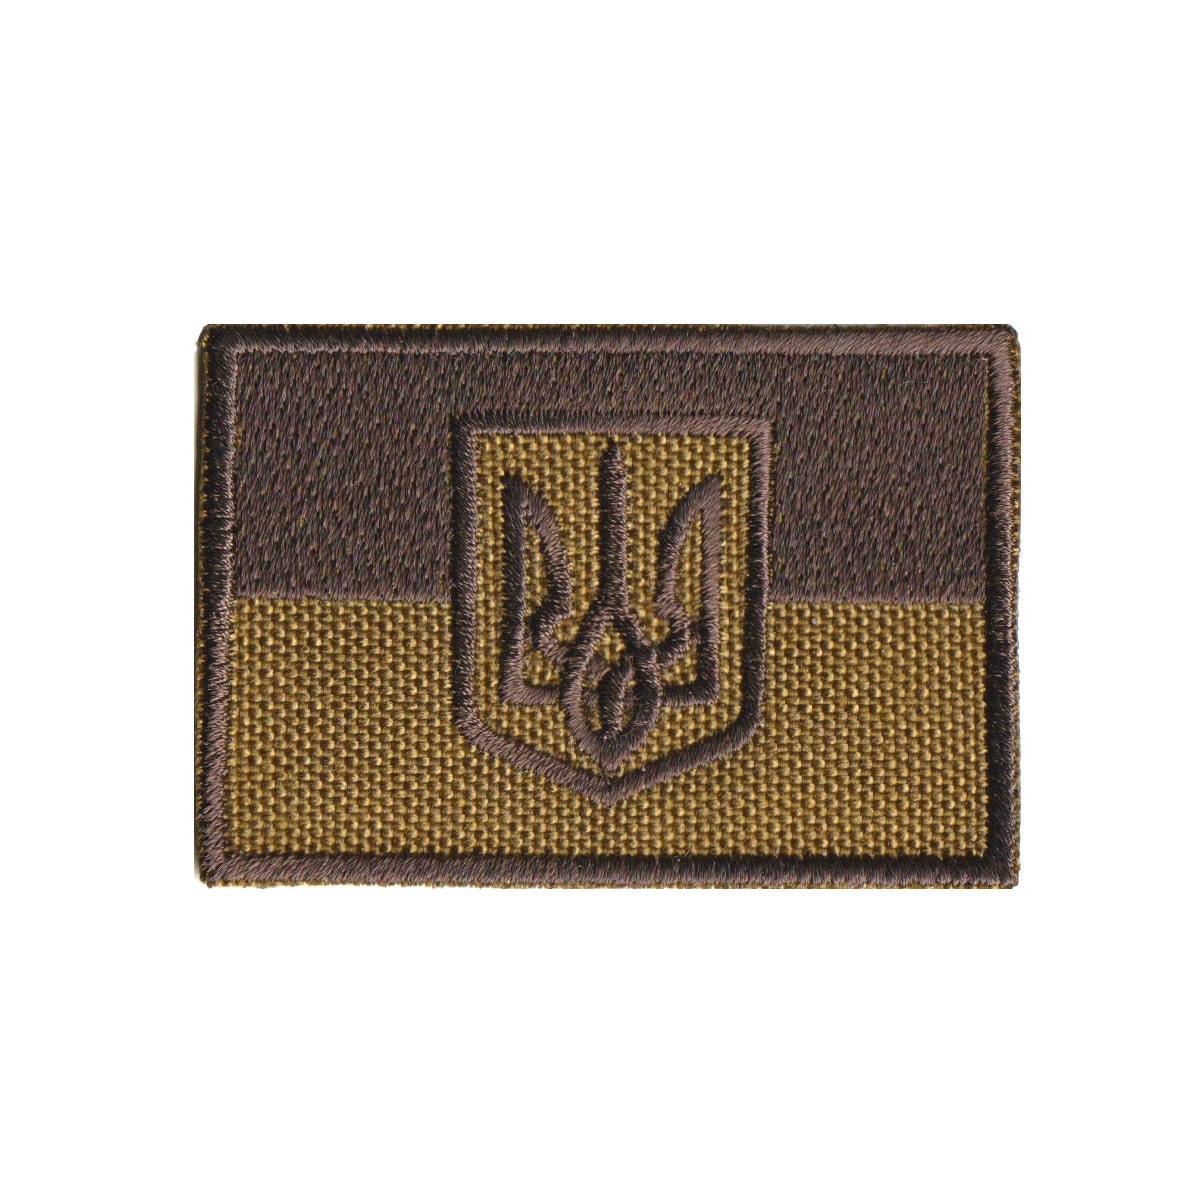 Ukraine Flag Embroidered Patch Ukrainian Iron On Emblem Kiev 1 Box = 5 Pcs